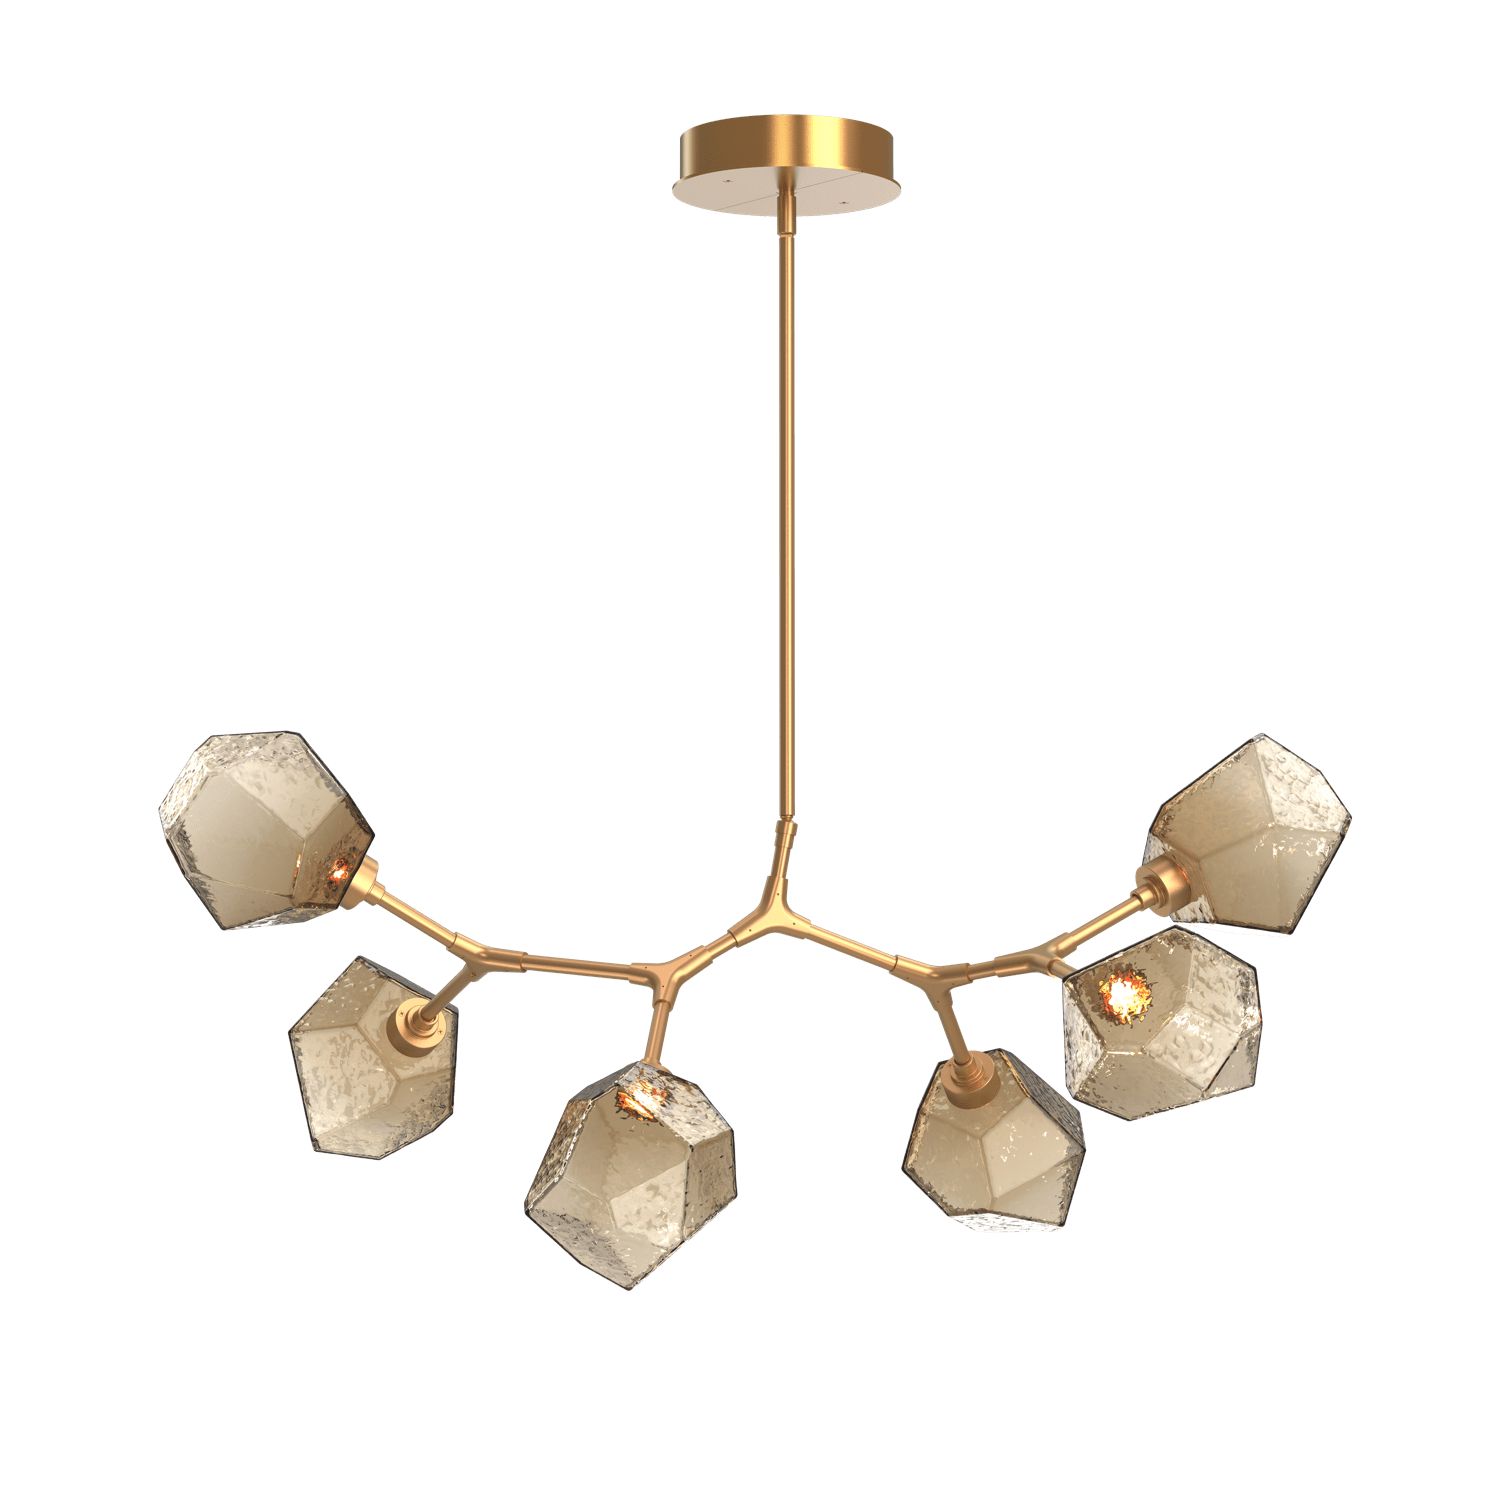 PLB0039-BA-NB-B-Hammerton-Studio-Gem-6-light-modern-branch-chandelier-with-novel-brass-finish-and-bronze-blown-glass-shades-and-LED-lamping